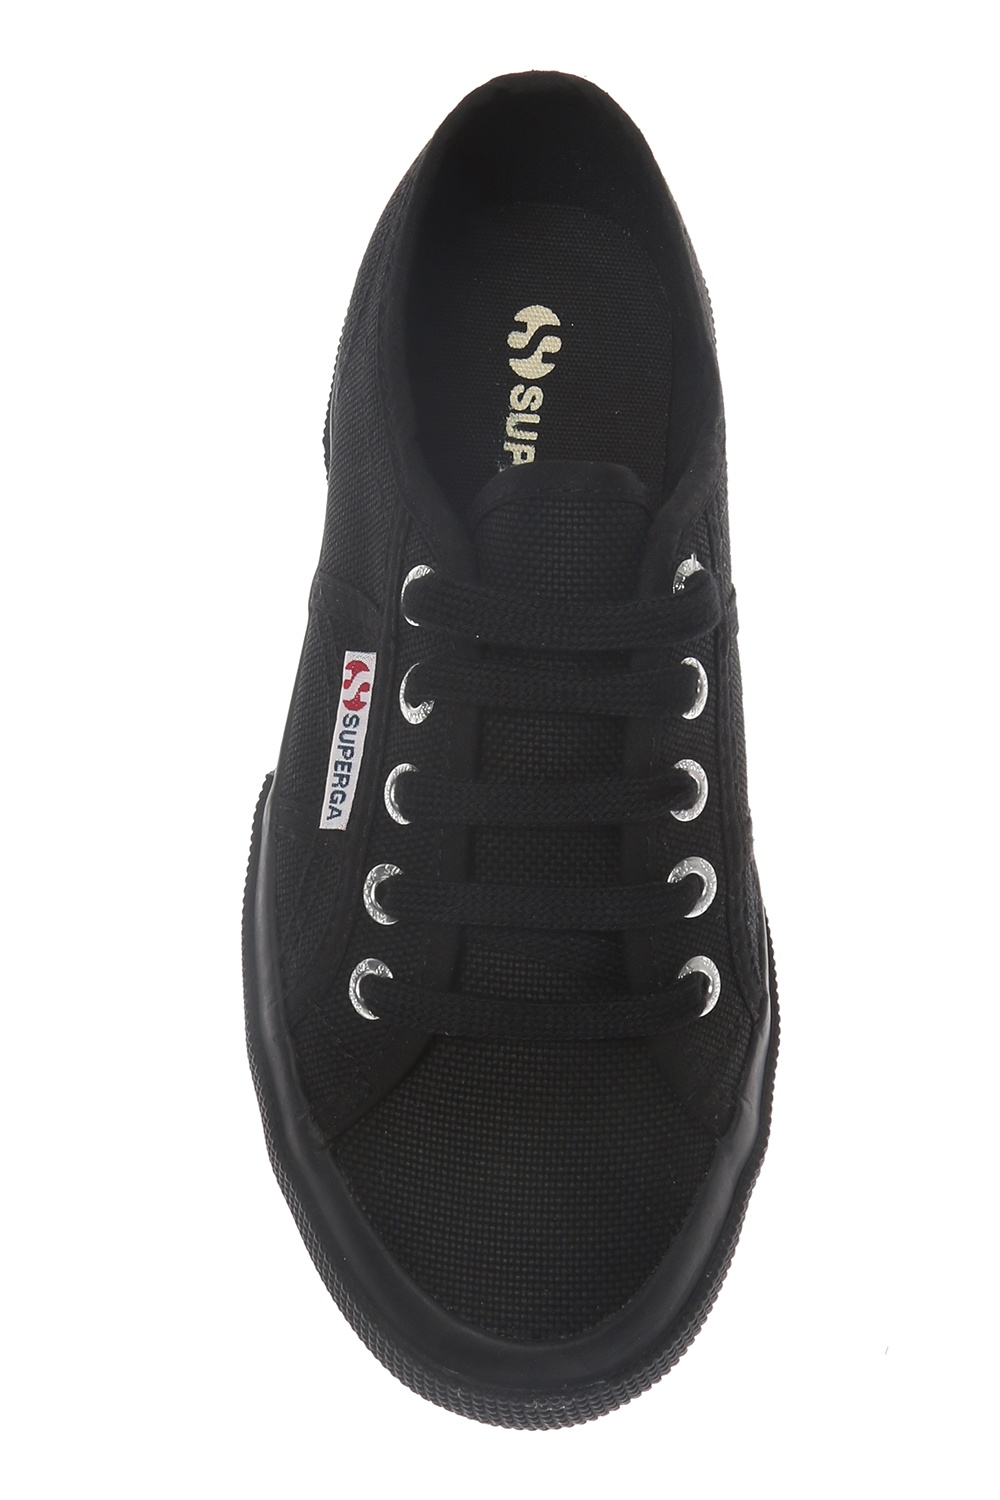 Superga '2750Cotu Classic' sport shoes